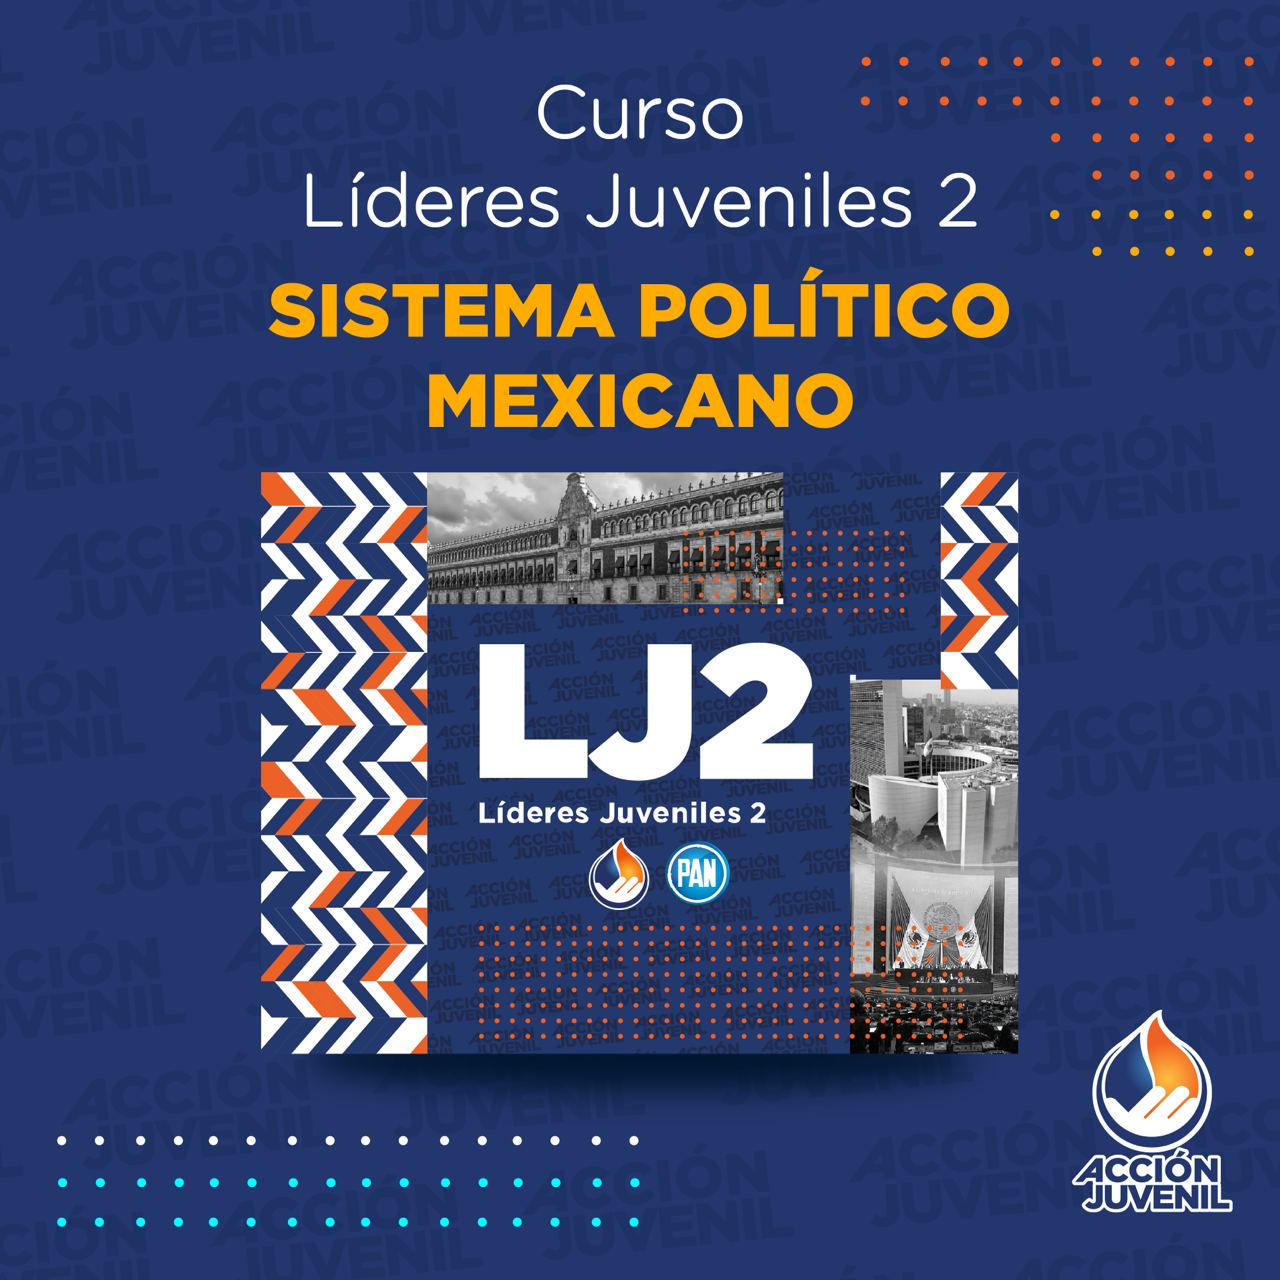 Curso Líderes Juveniles 2 Sistema Político Mexicano Chihuahua, CHH 16/07/22